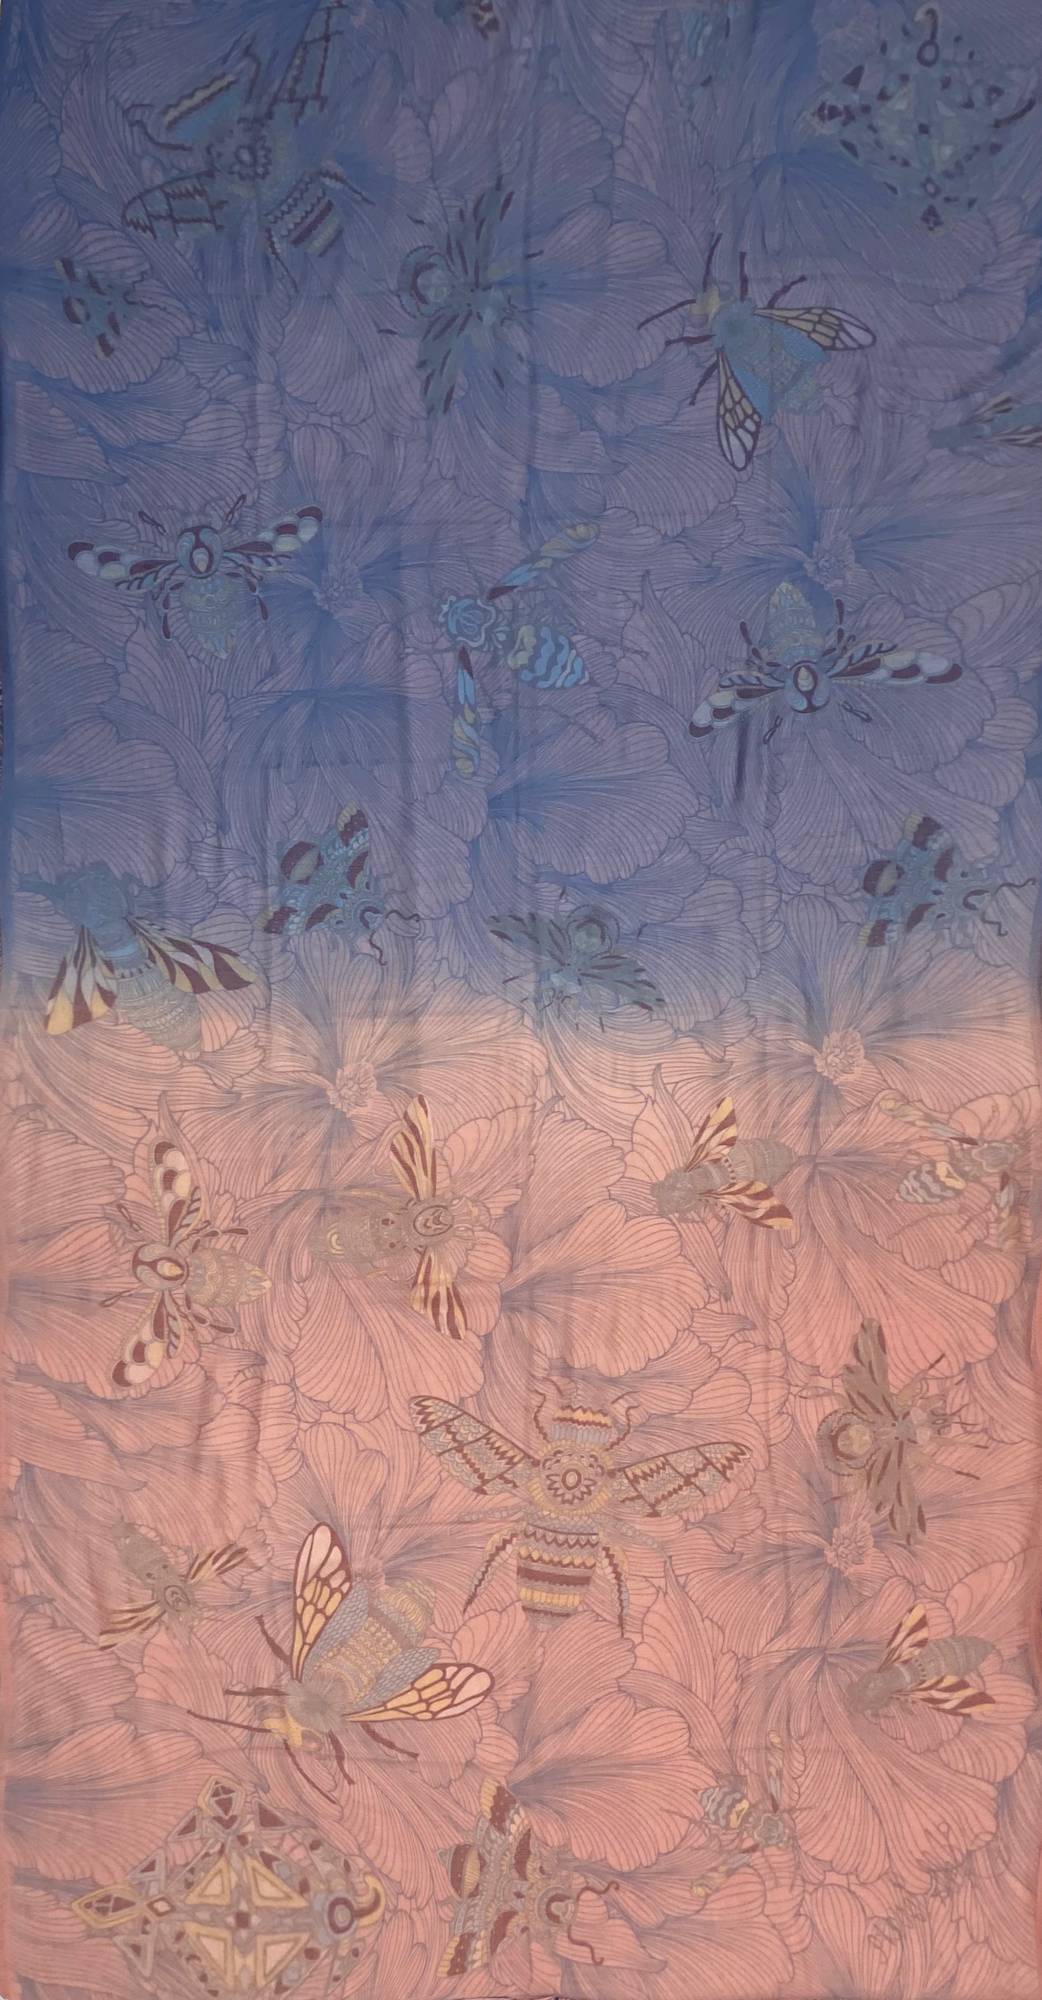 Schal zweilagig, doubleface auf Seide bedruckt Motiv "JUST BEES" 100x200 Rückseite 100% Kaschmir Farbverlauf Rosa-Blau